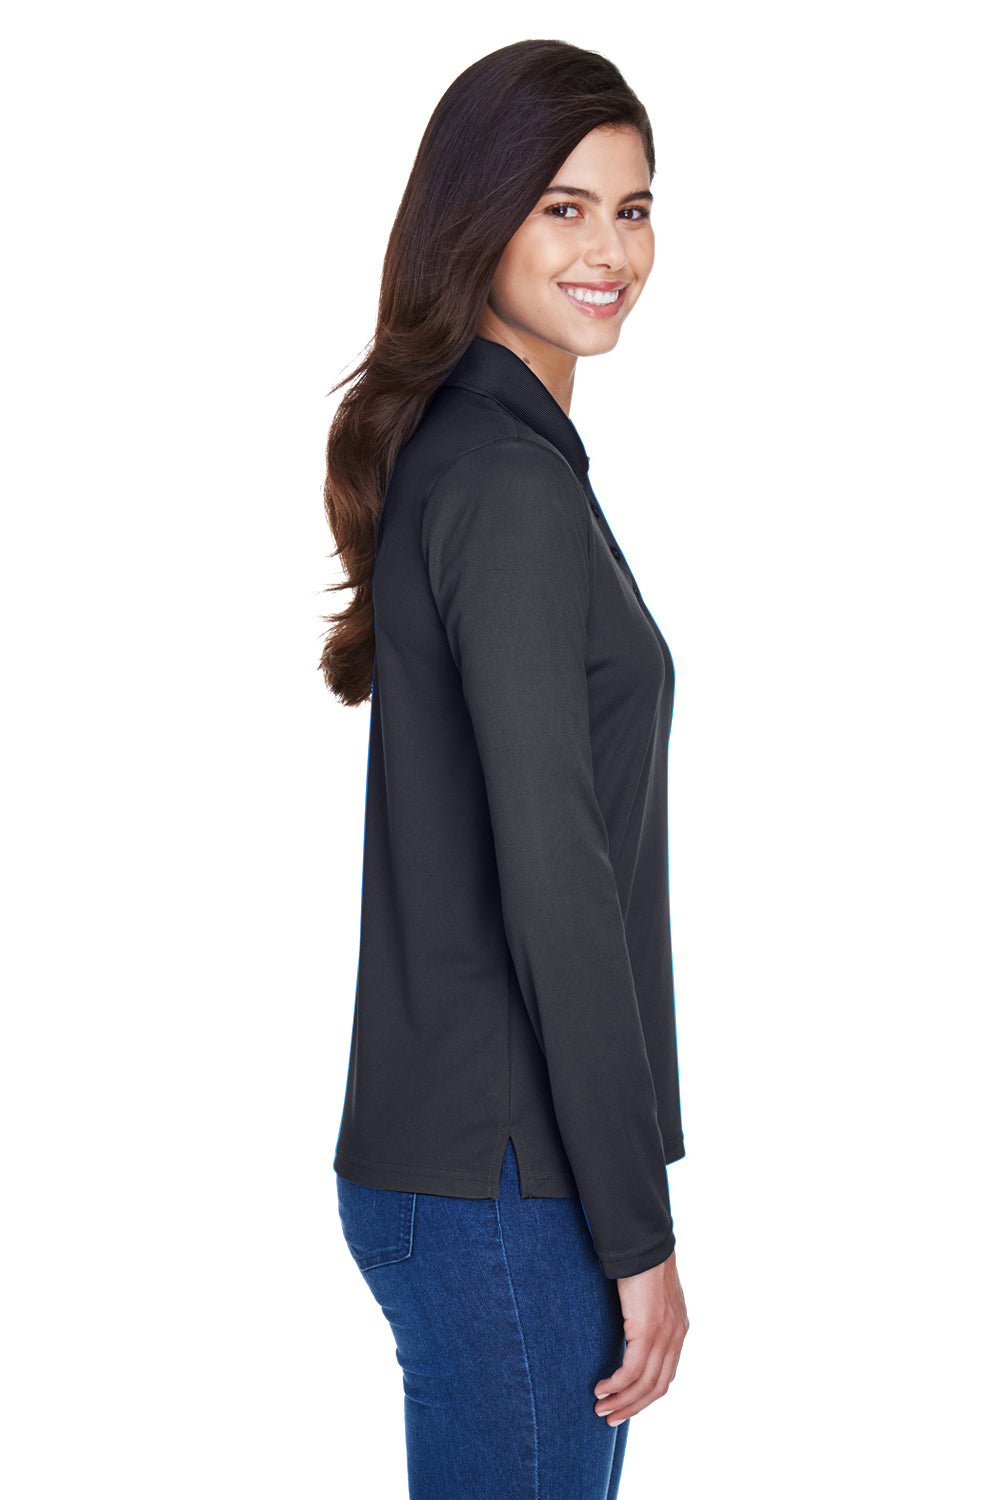 Core 365 78192 Womens Pinnacle Performance Moisture Wicking Long Sleeve Polo Shirt Carbon Grey Side